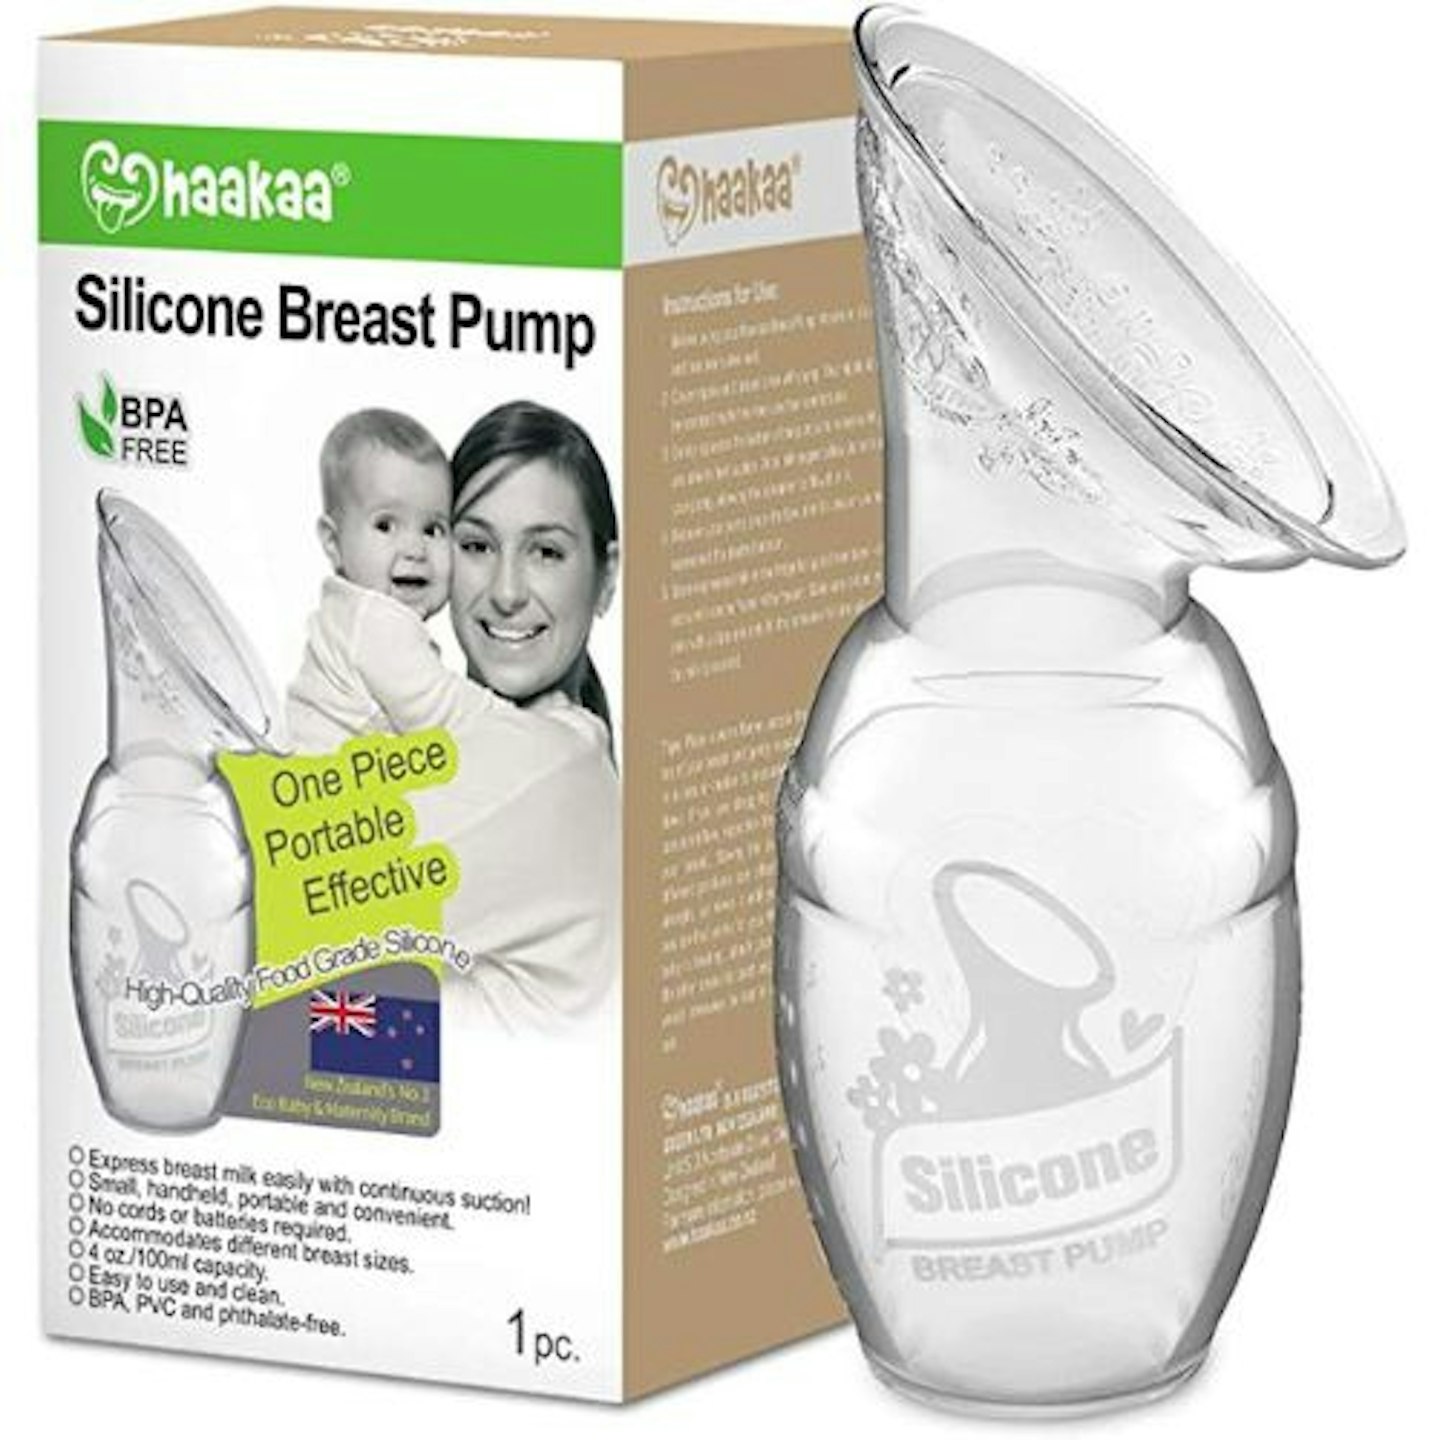 haakaa Manual Breast Pump Silicone Breast Pump